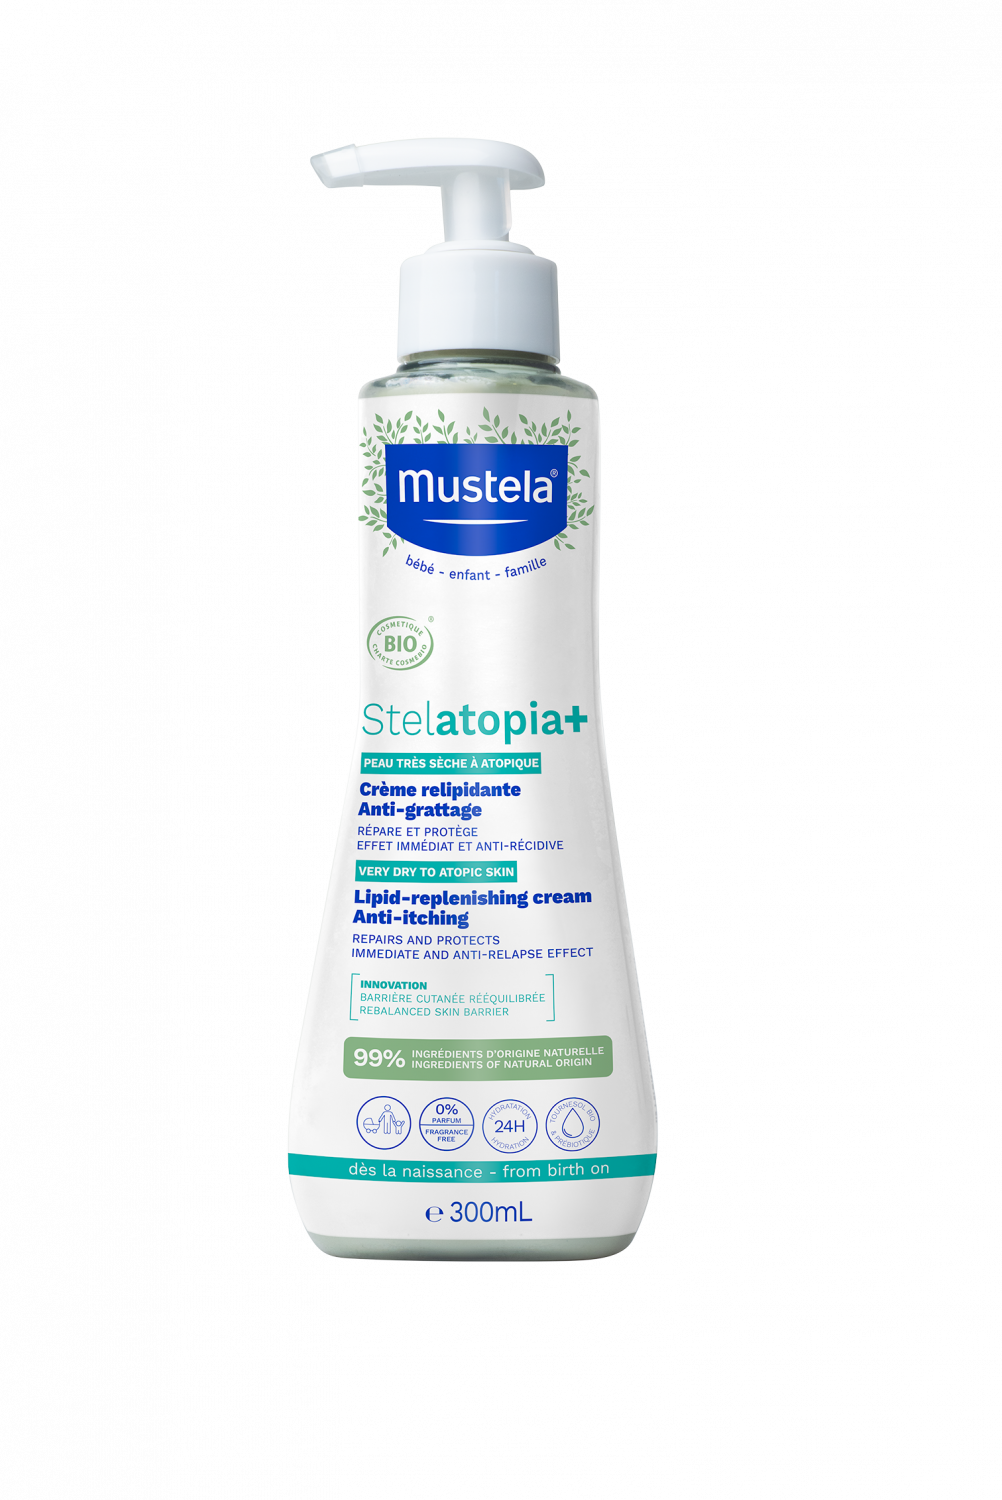 Stelatopia+ Crème relipidante anti-grattage bio Mustela - flacon-pompe de 300ml